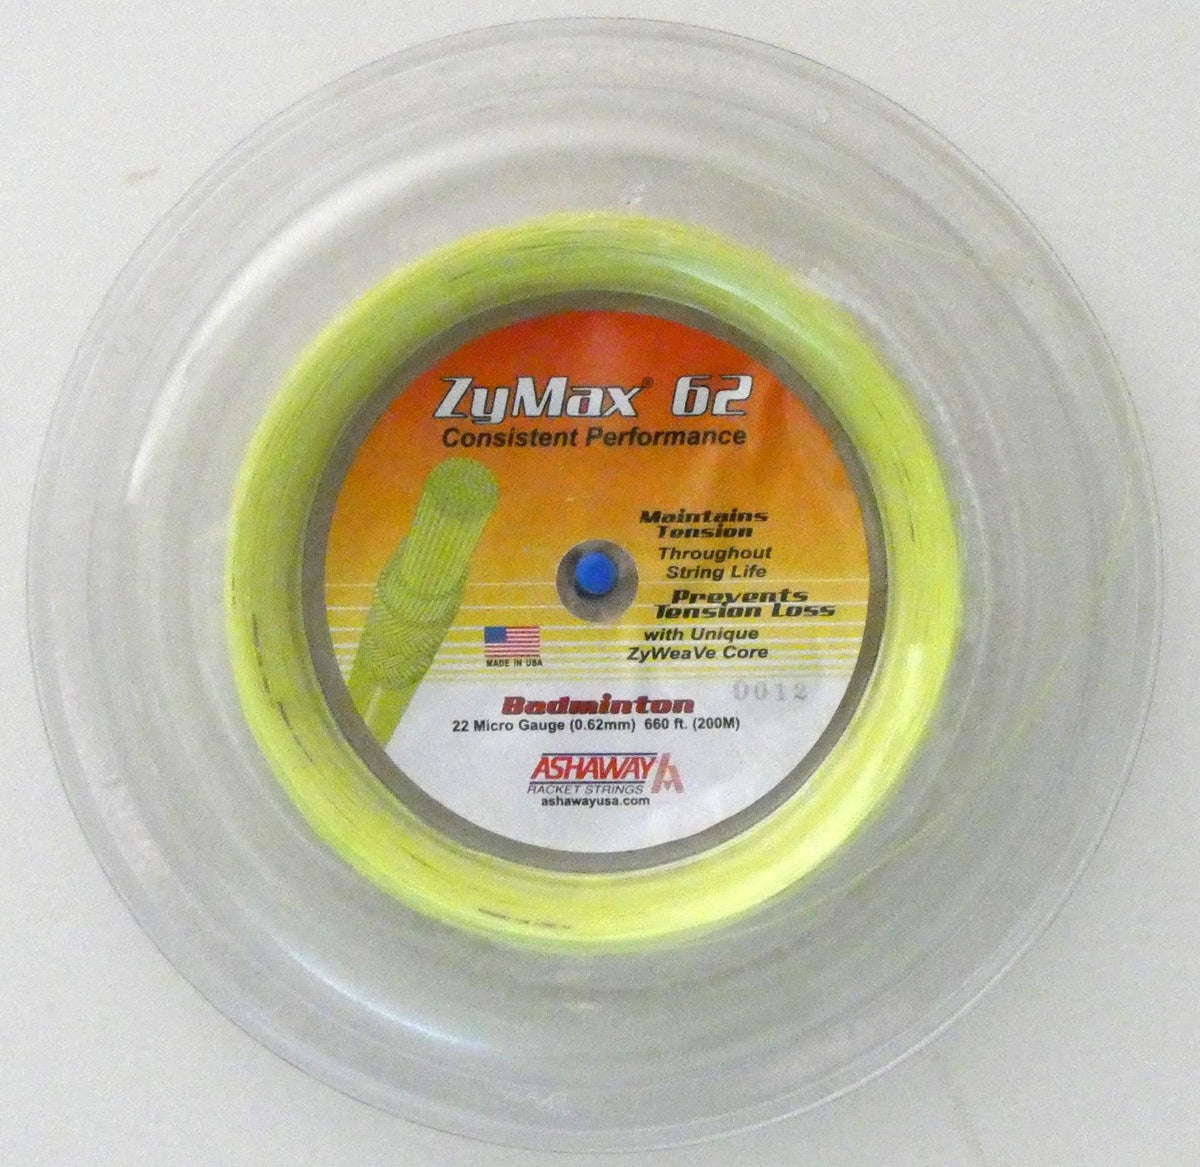 Ashaway ZyMax 62 Badminton String, Neon Yellow, 200 M REEL